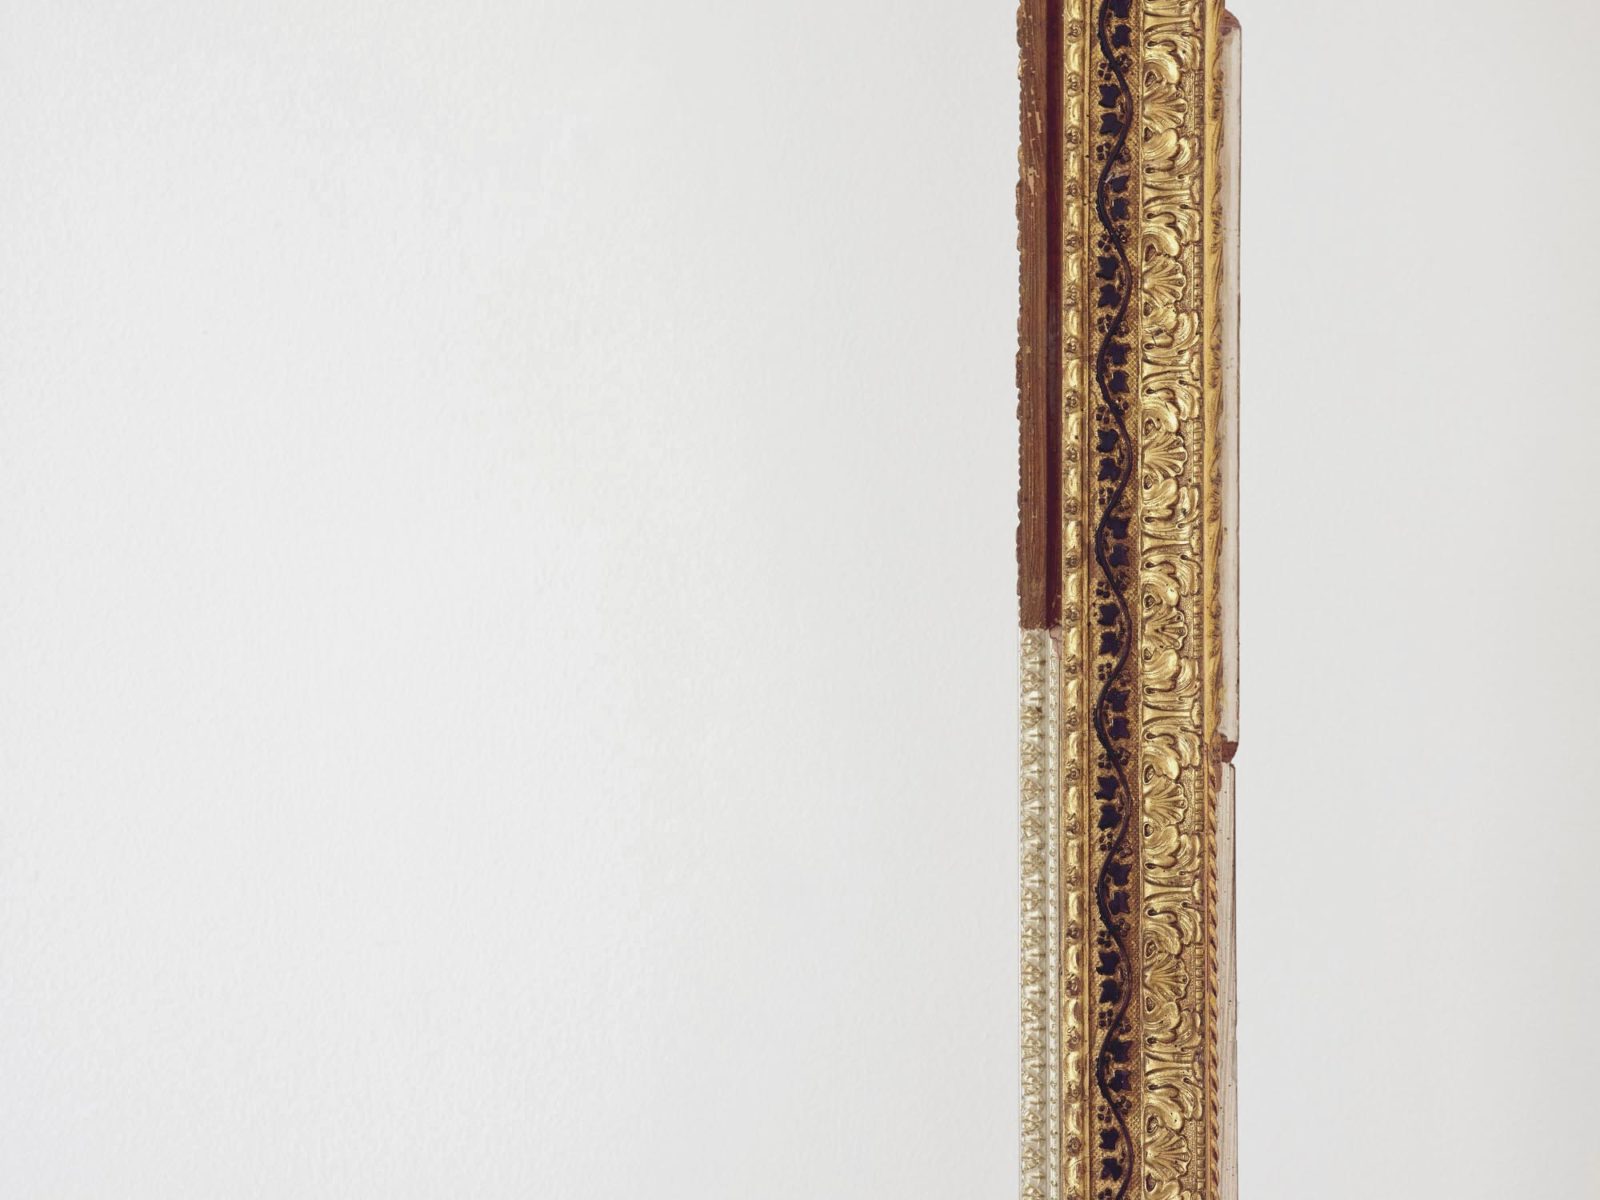 Penzo+Fiore, Gold one (det.), 2019, gilded frames, glass, ph. G. Cecchinato